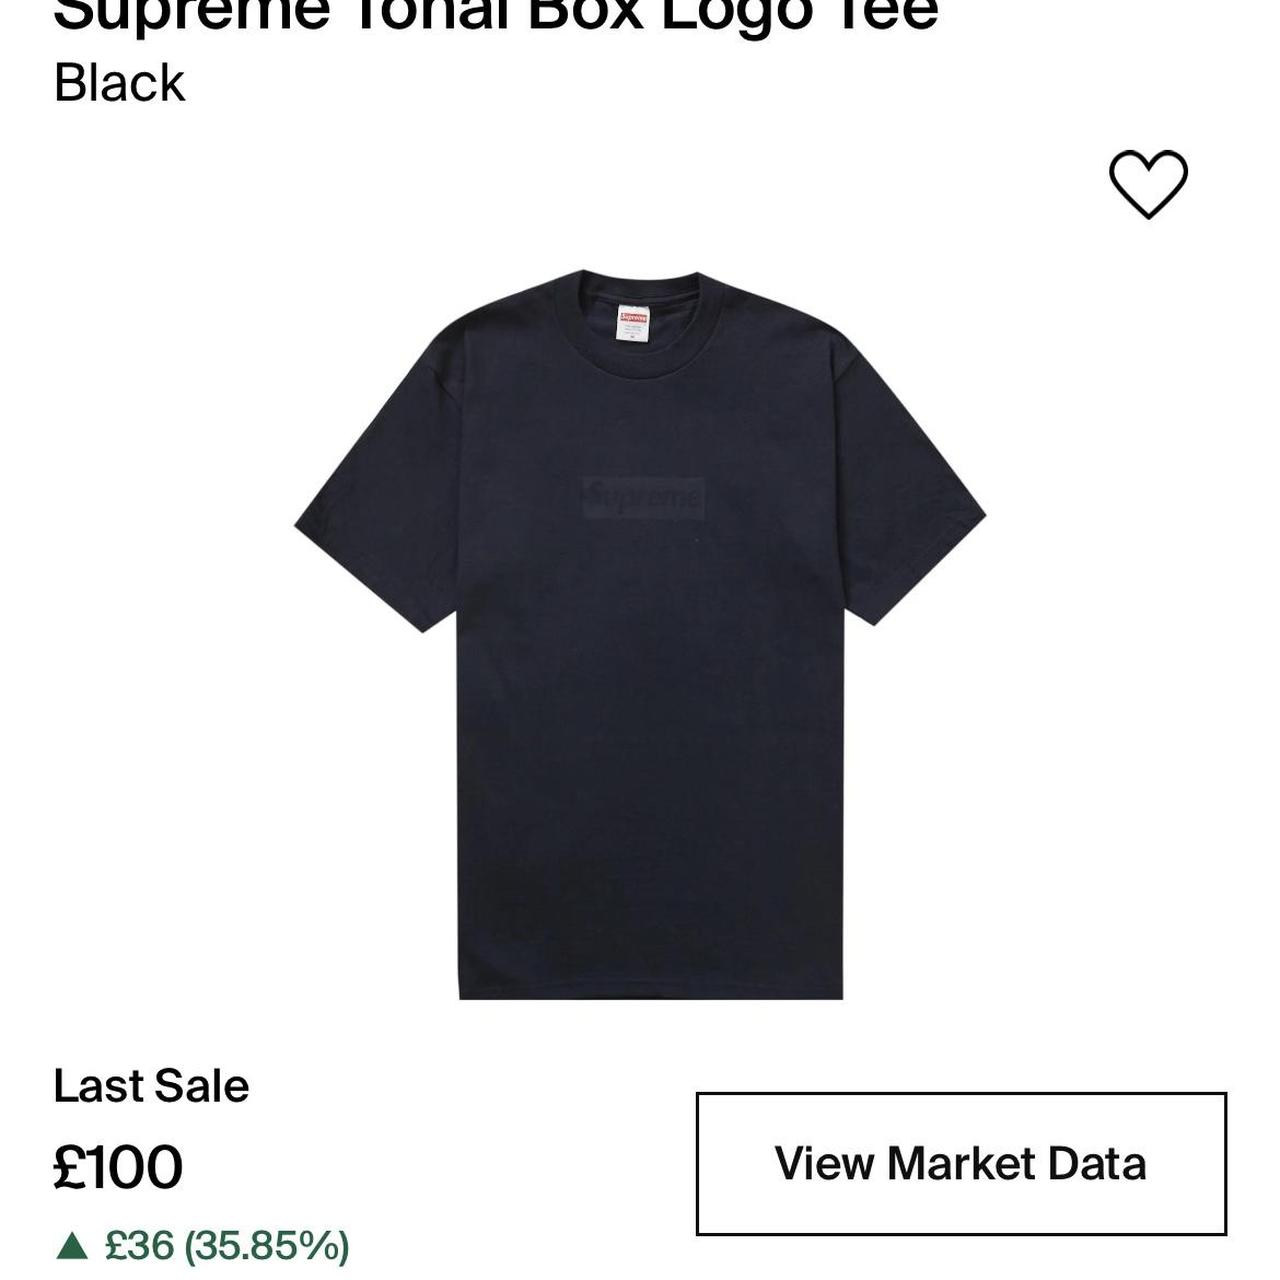 Supreme Tonal Box Logo Tee Black XXL